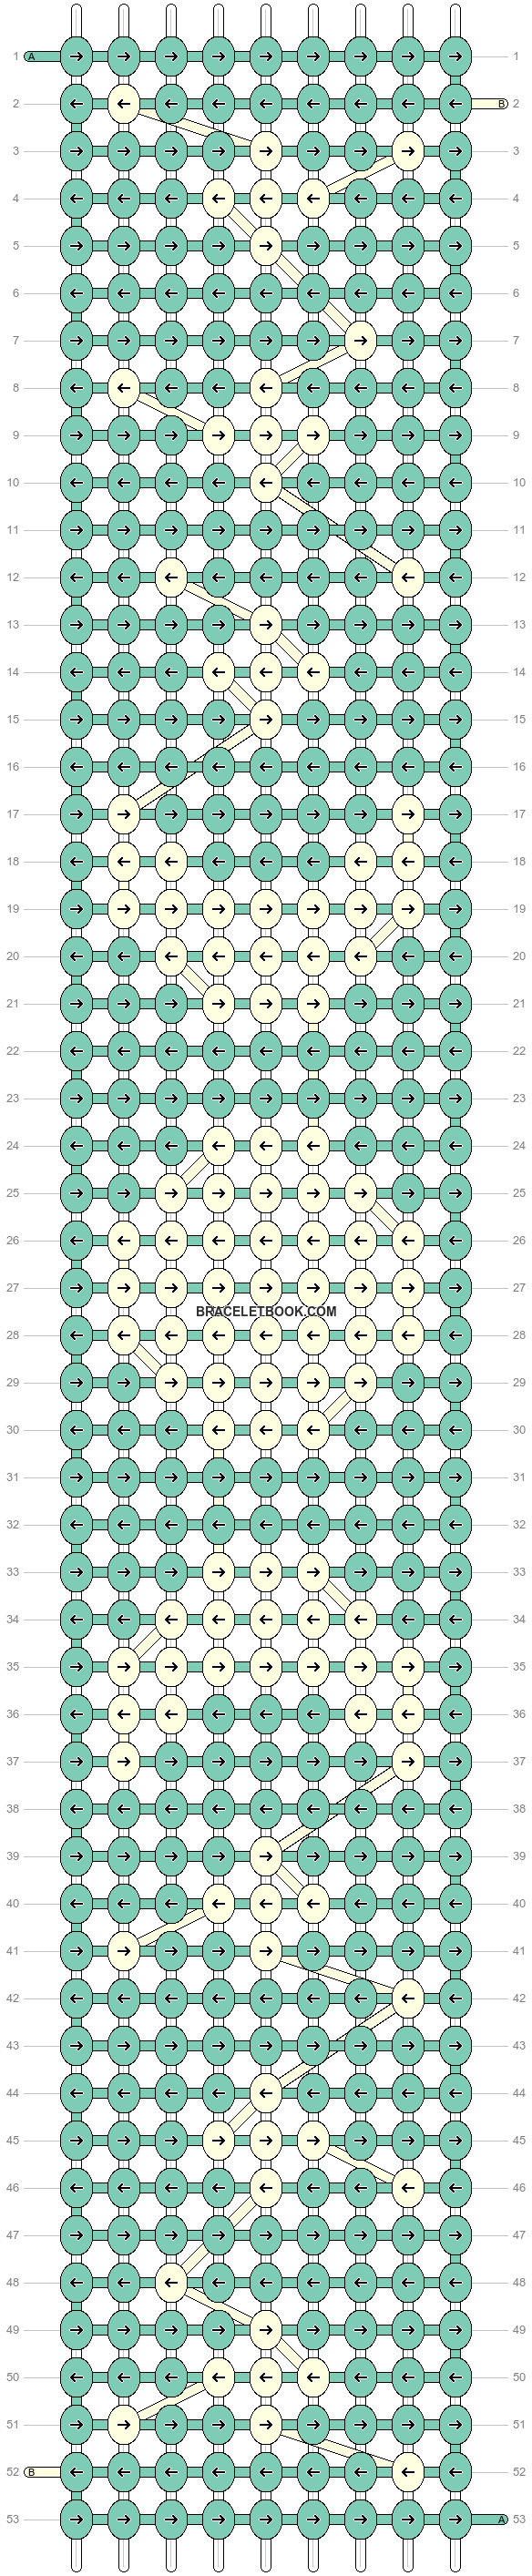 Alpha pattern #40067 variation #100491 pattern